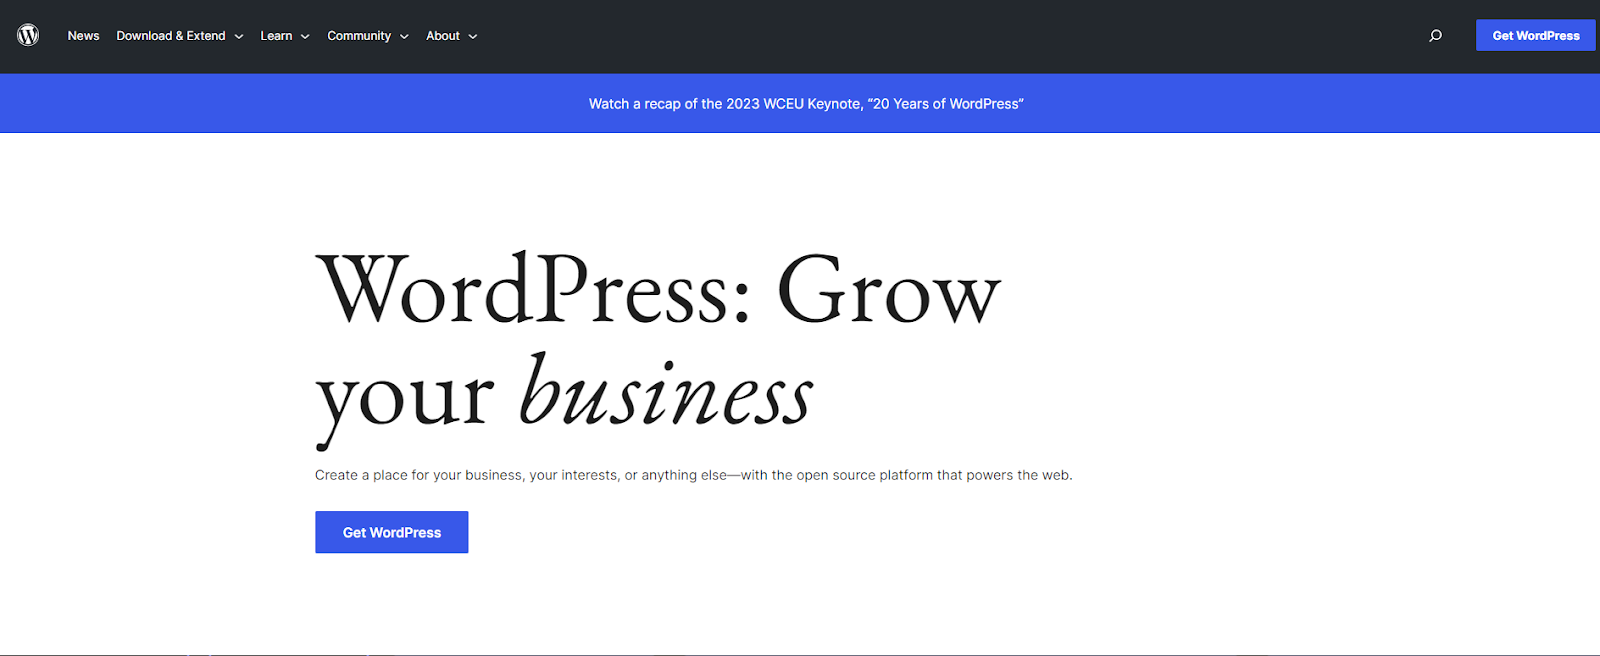 Wordpress home page